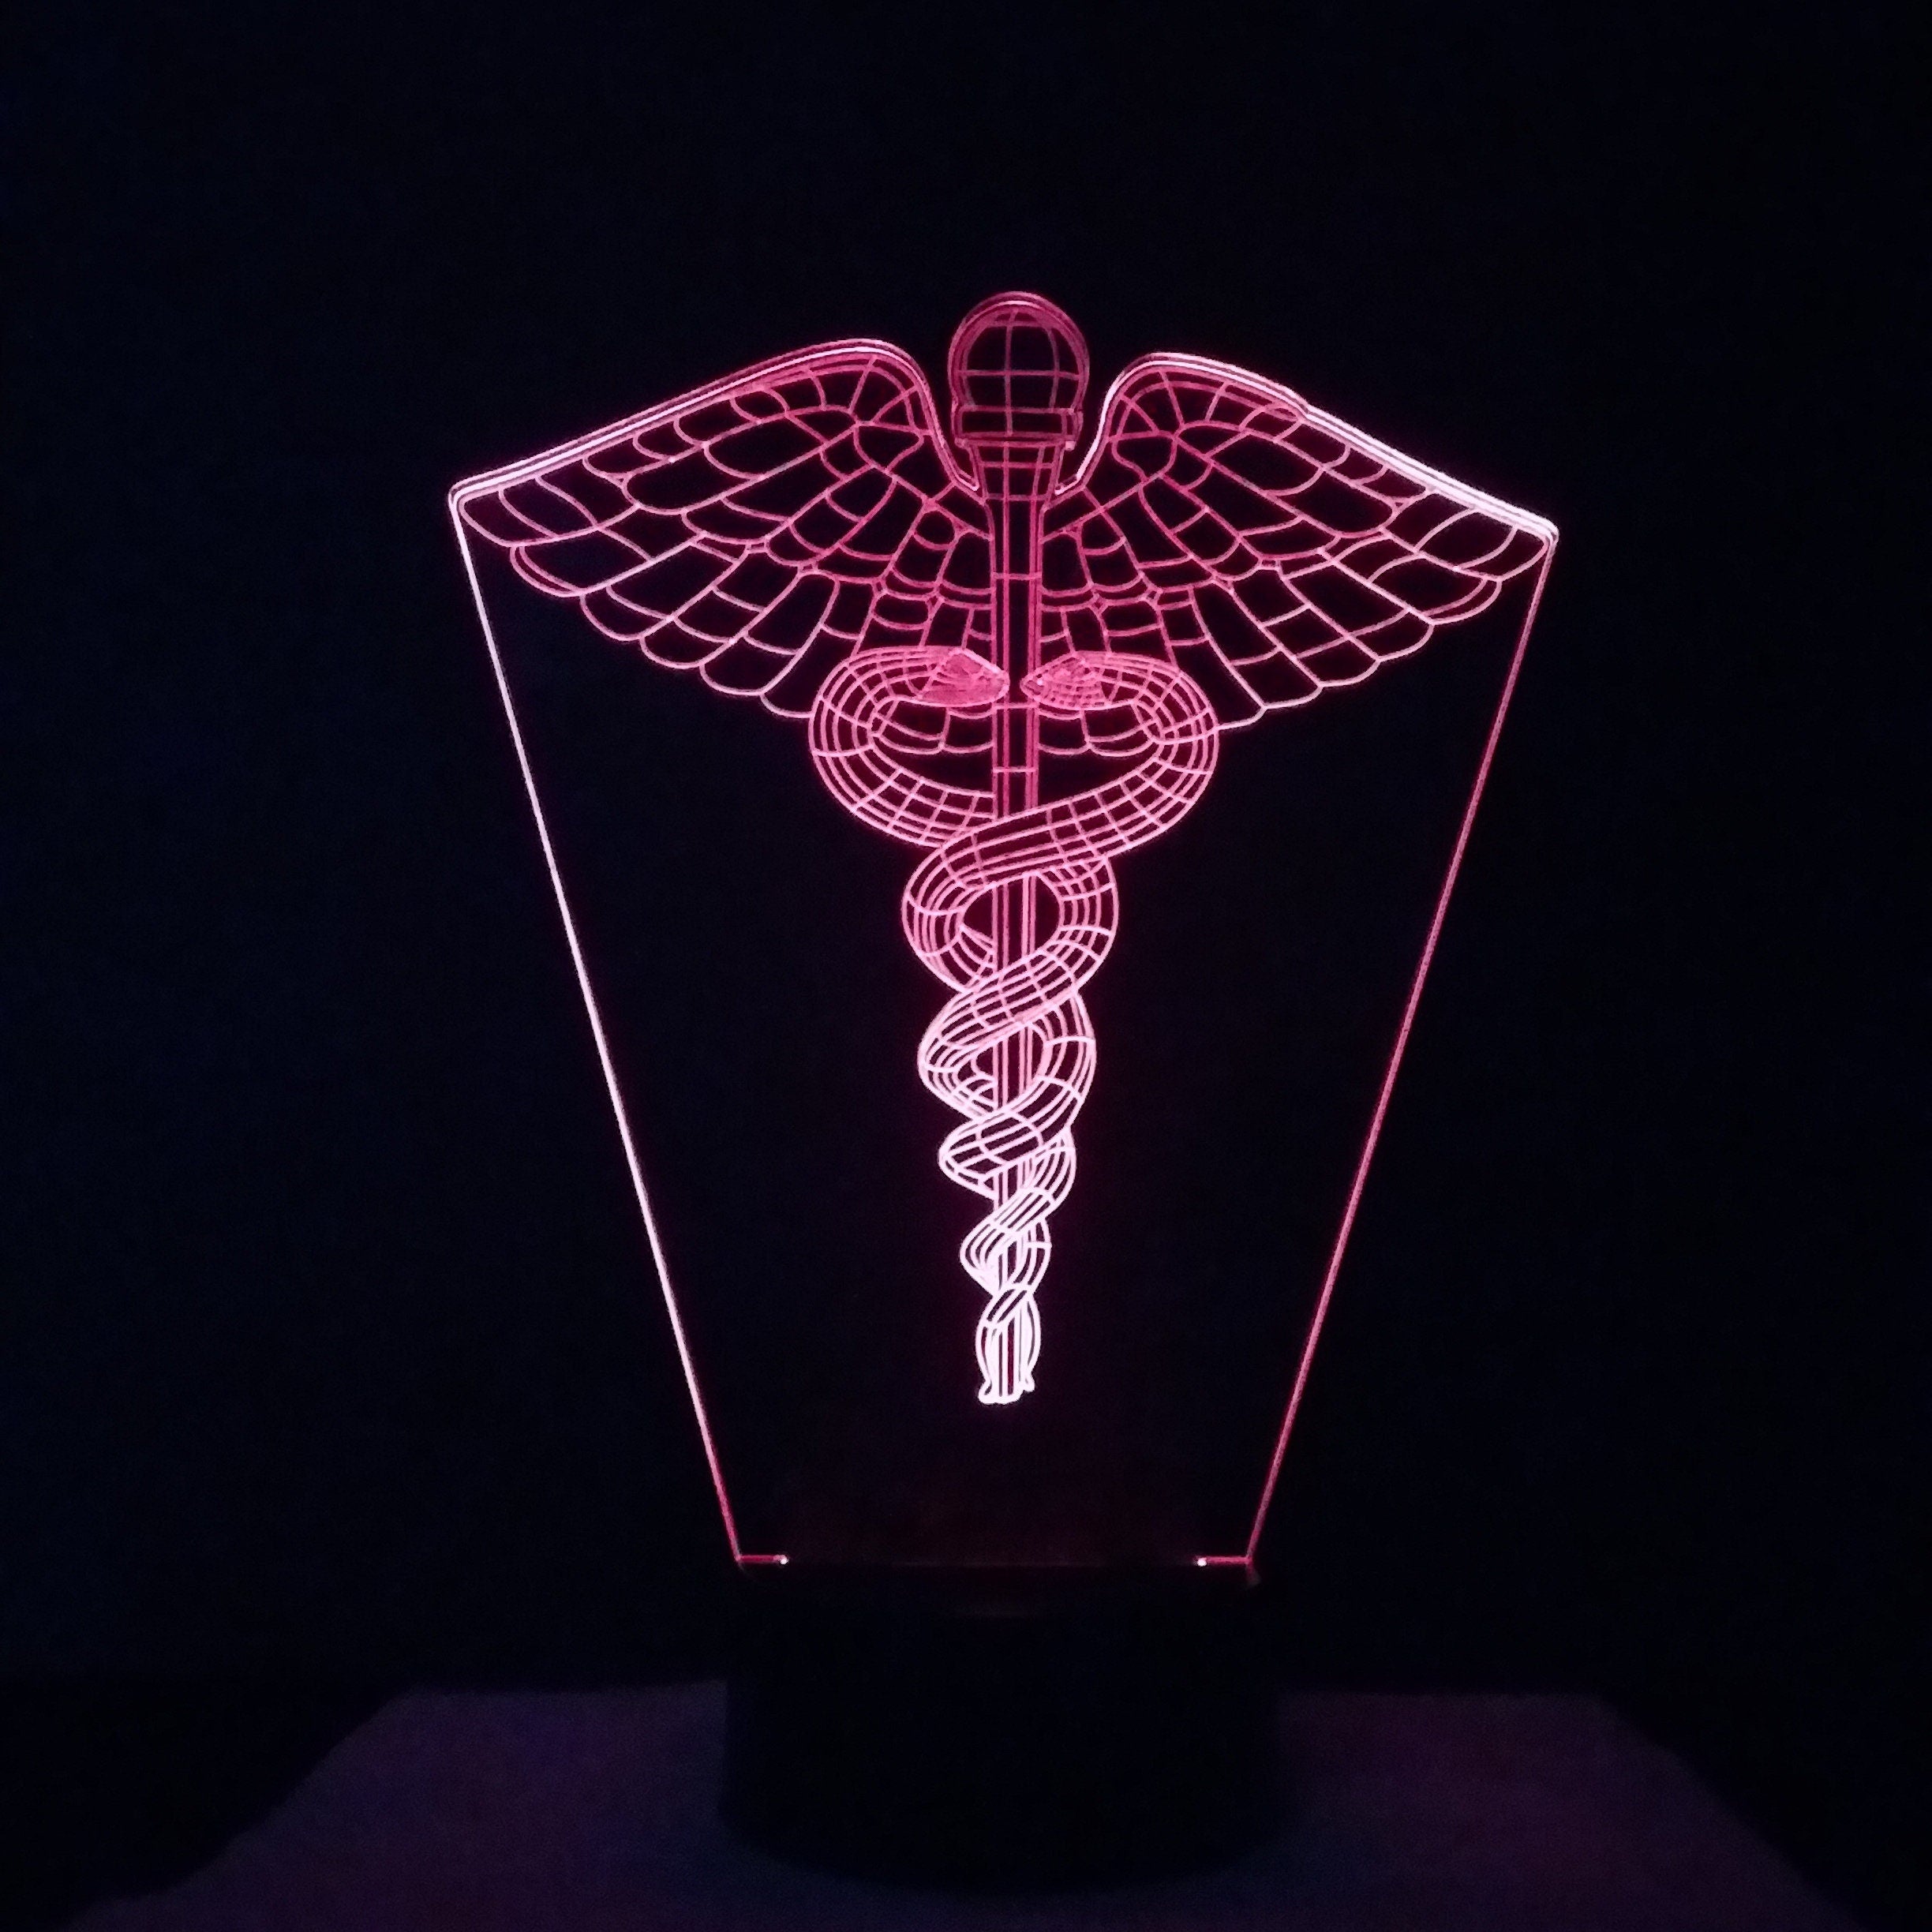 Awesome "Medical Symbol" 3D LED Lamp (21158) - FREE SHIPPING!